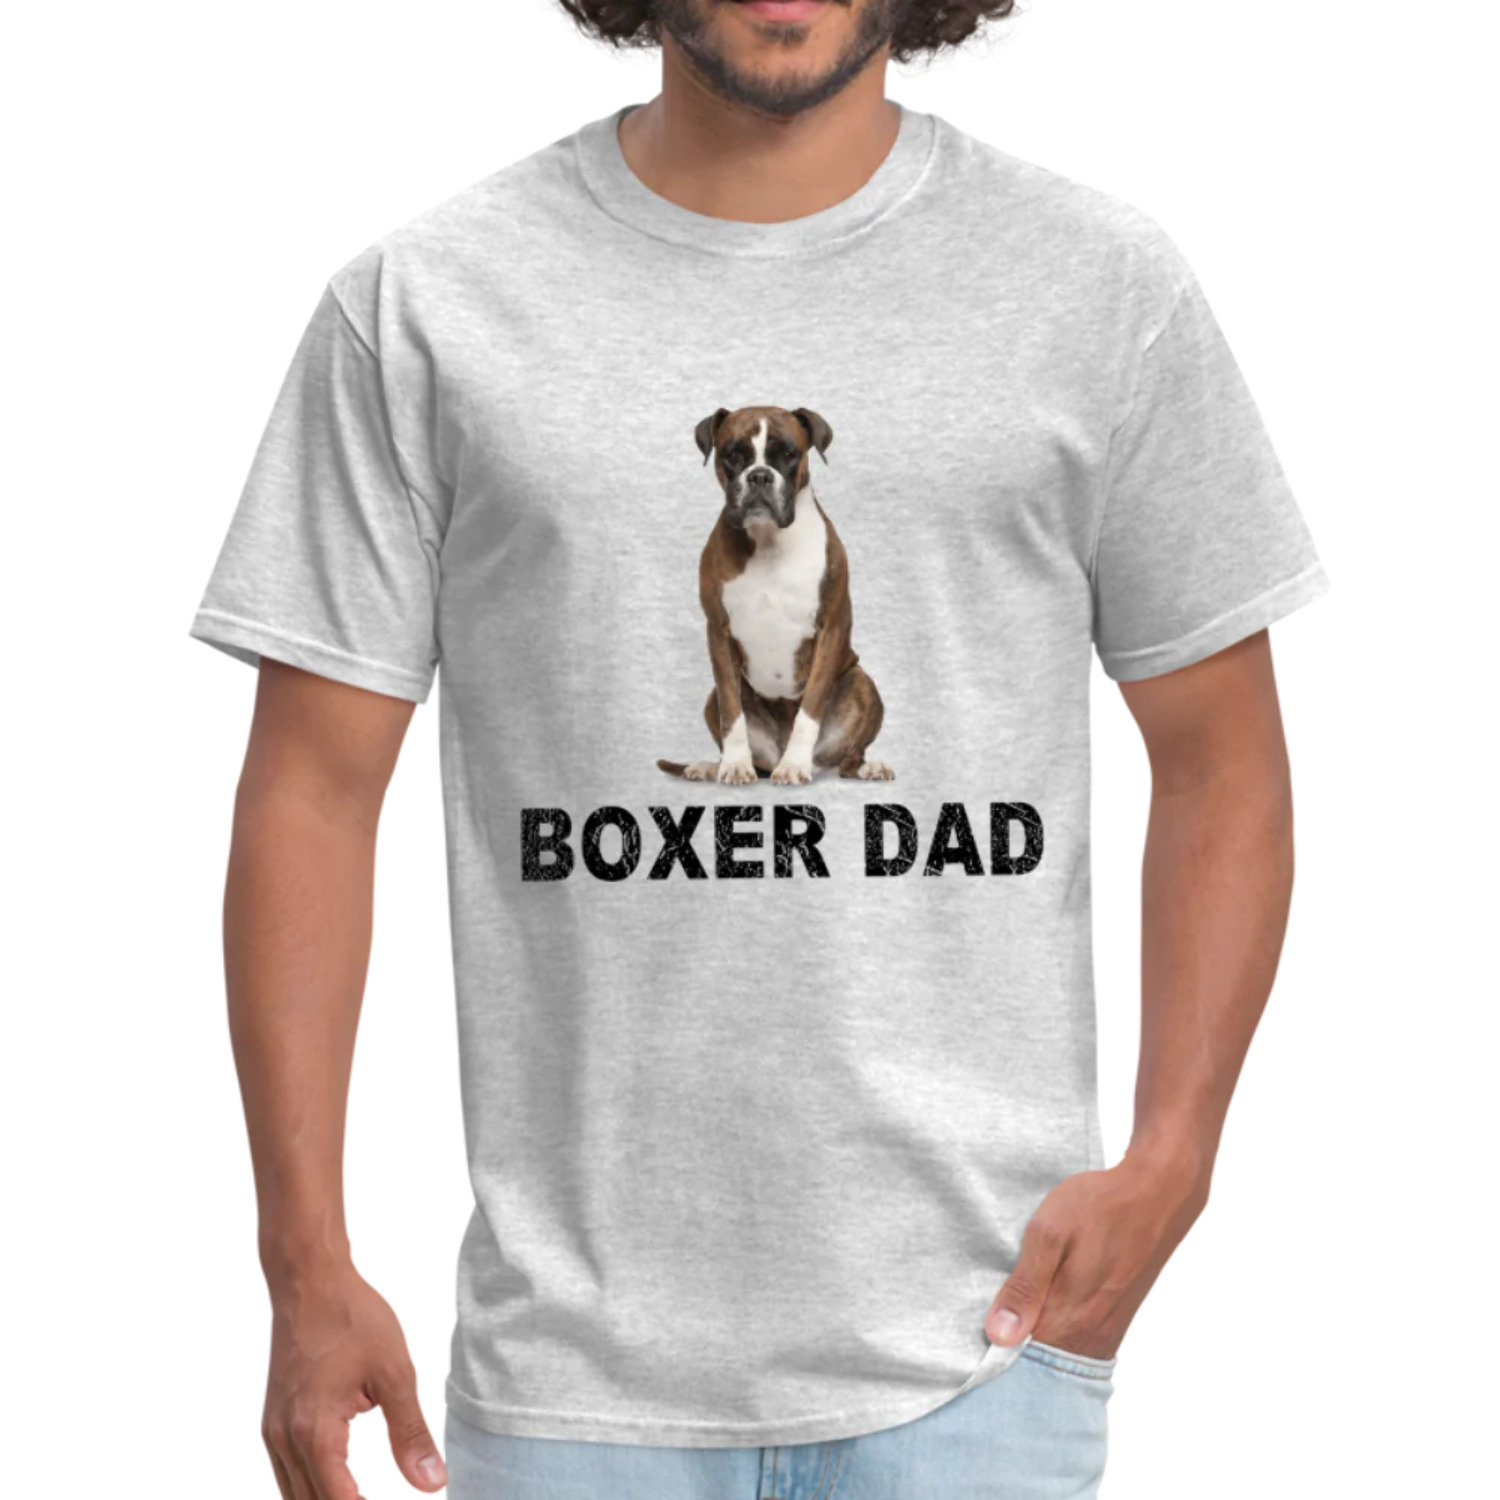 Boxer Dad Shirt, Dog Dad TShirt, Gift For Dog Lover, Dog Tshirt, Gift for Boxer Dad, Dog Papa Tee, Dog Dad Gift, Boxer Lover Shirt - image 2 of 11